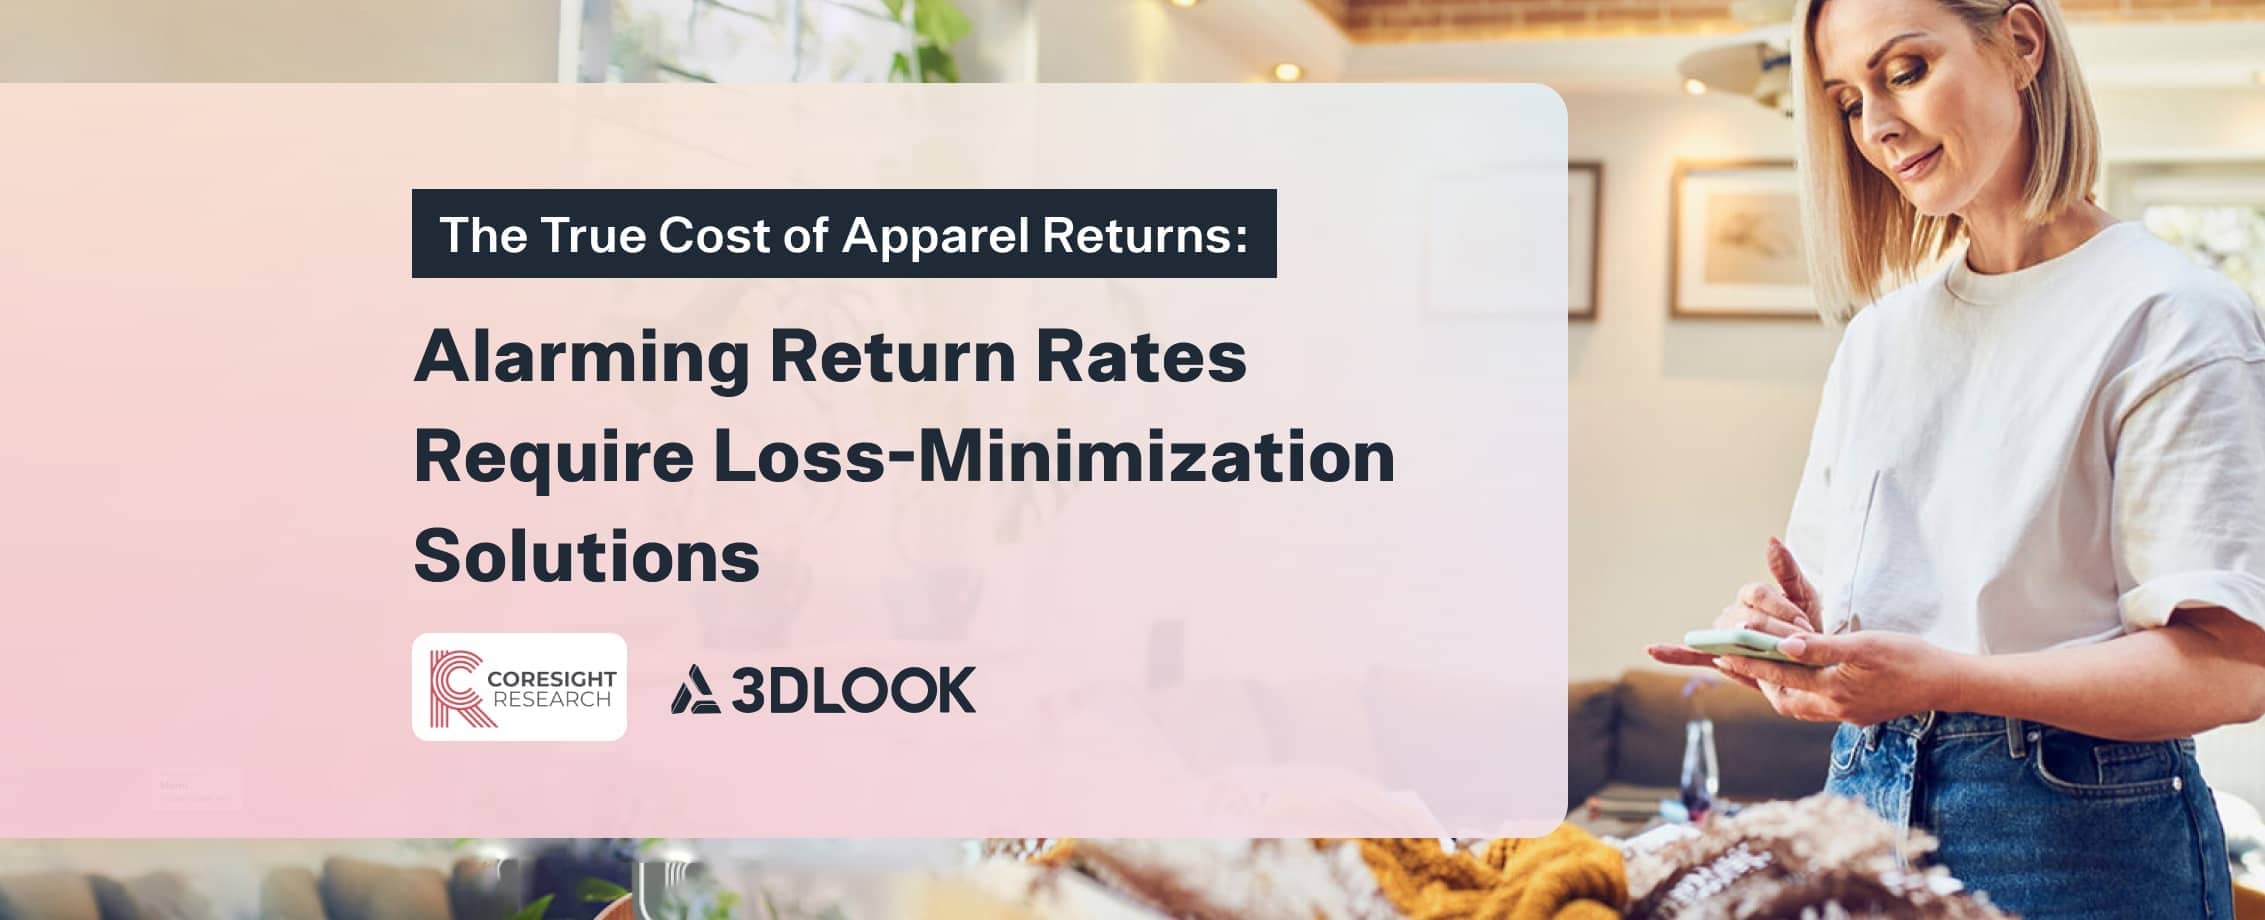 The alarming return rates of apparel necessitate loss-minimization solutions.